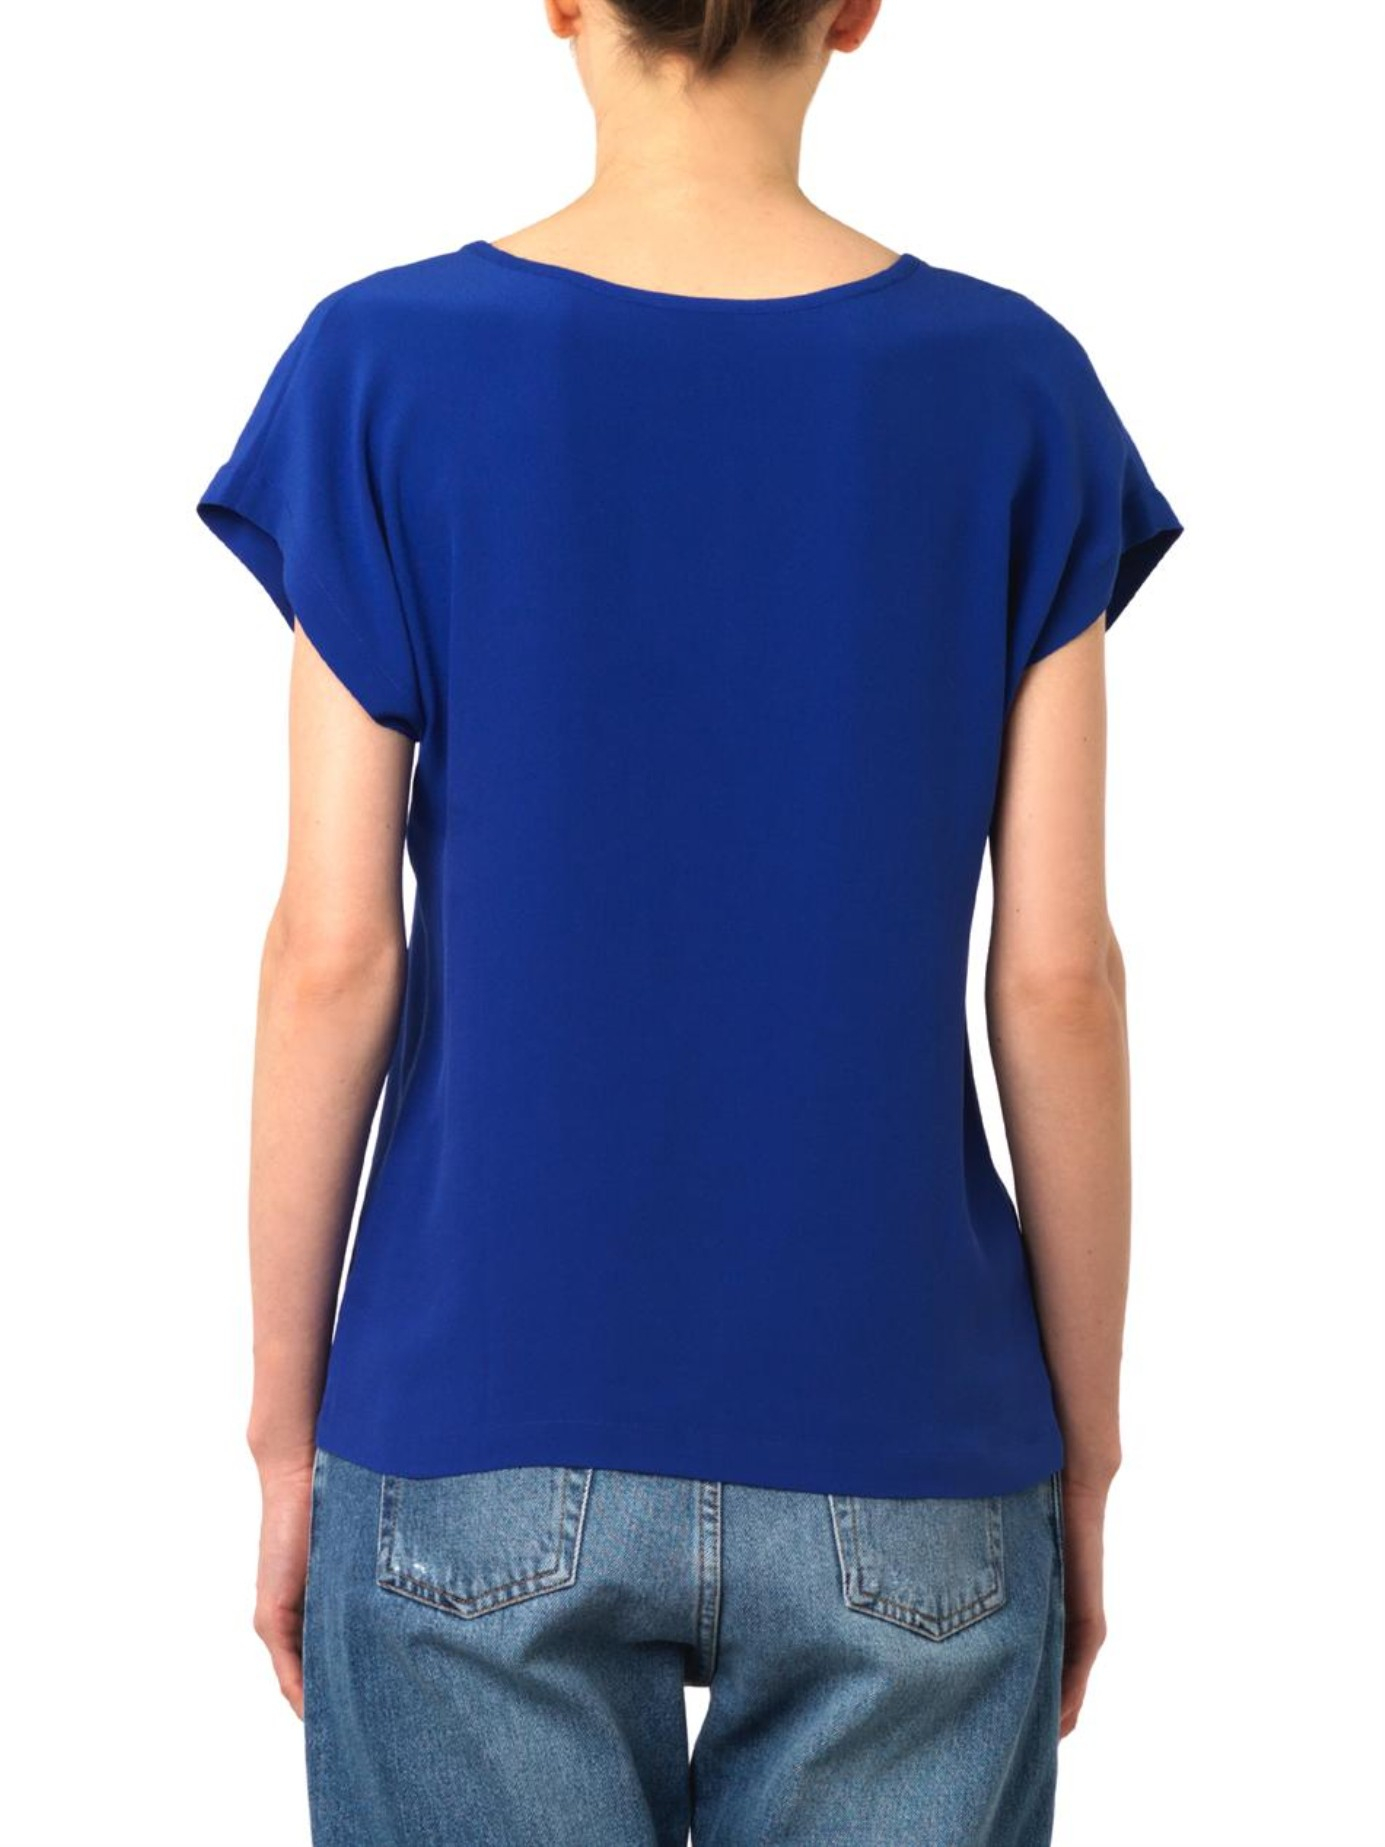 Lyst - Freda Scoop-Neck Silk T-Shirt in Blue